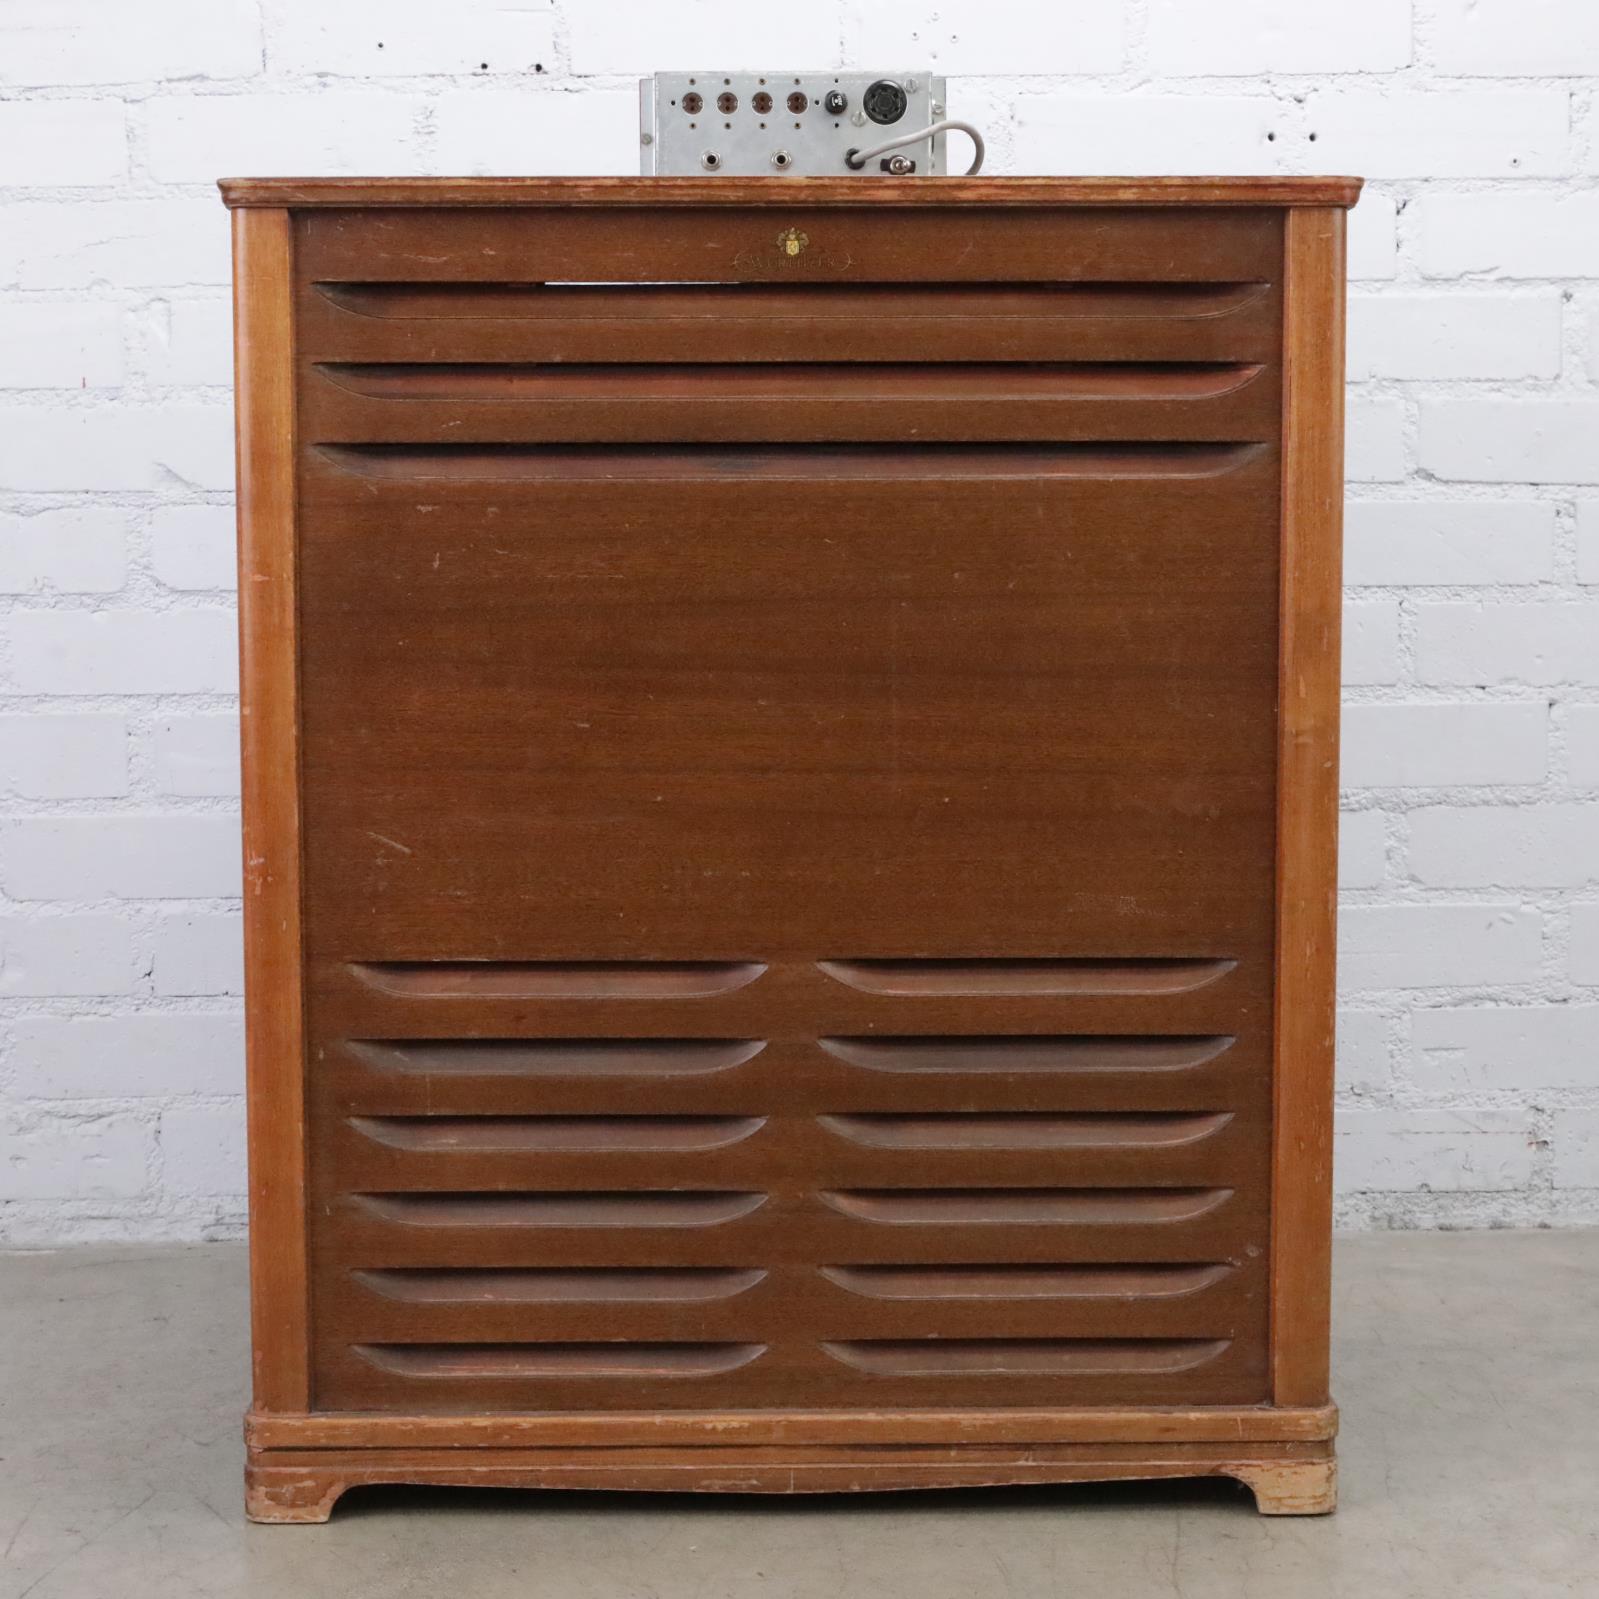 Wurlitzer Tone Cabinet Model 500 Speaker Cab Owned By Dennis Herring #49236